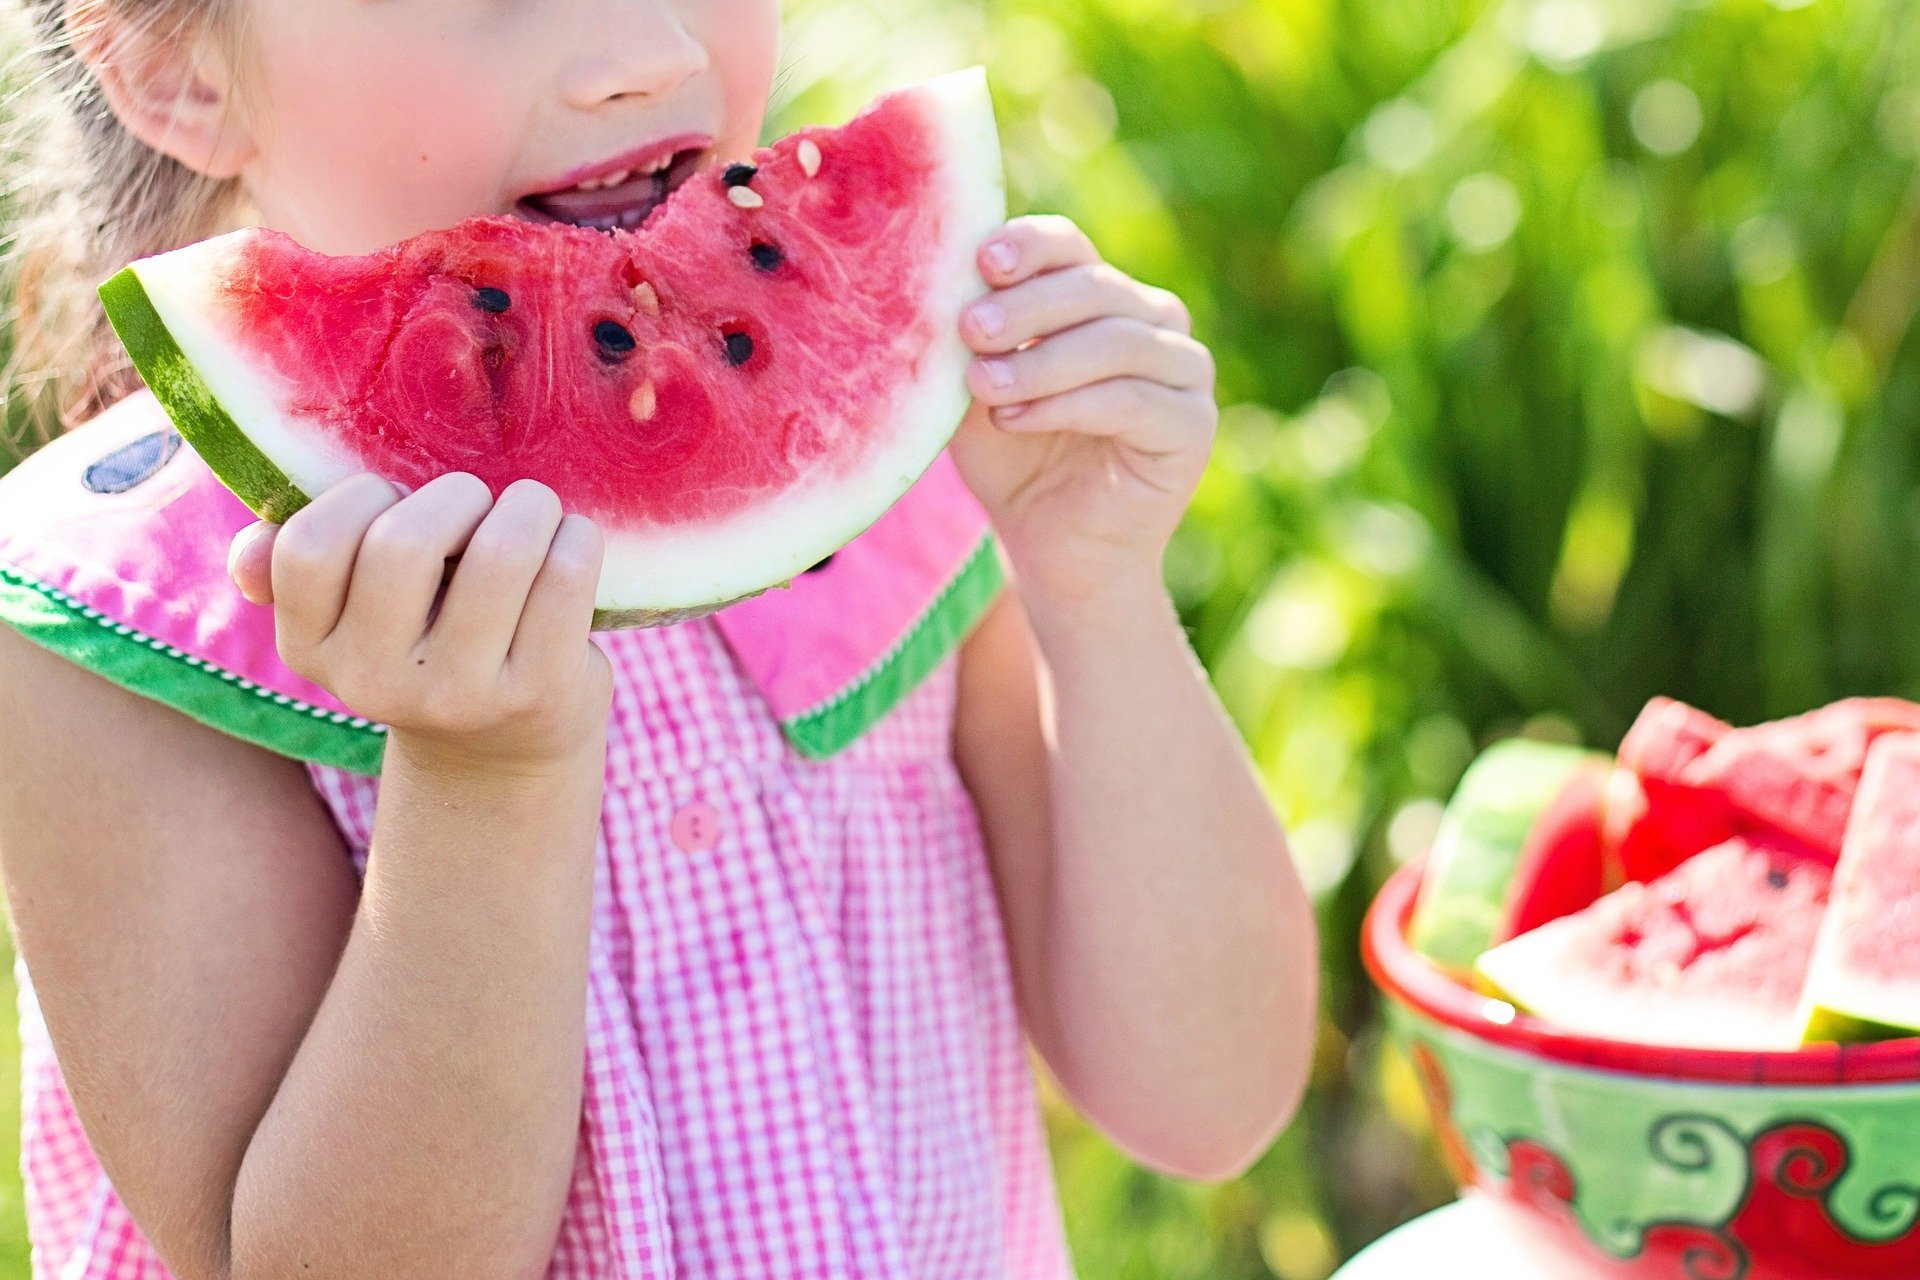 A child enjoys a piece of watermelon